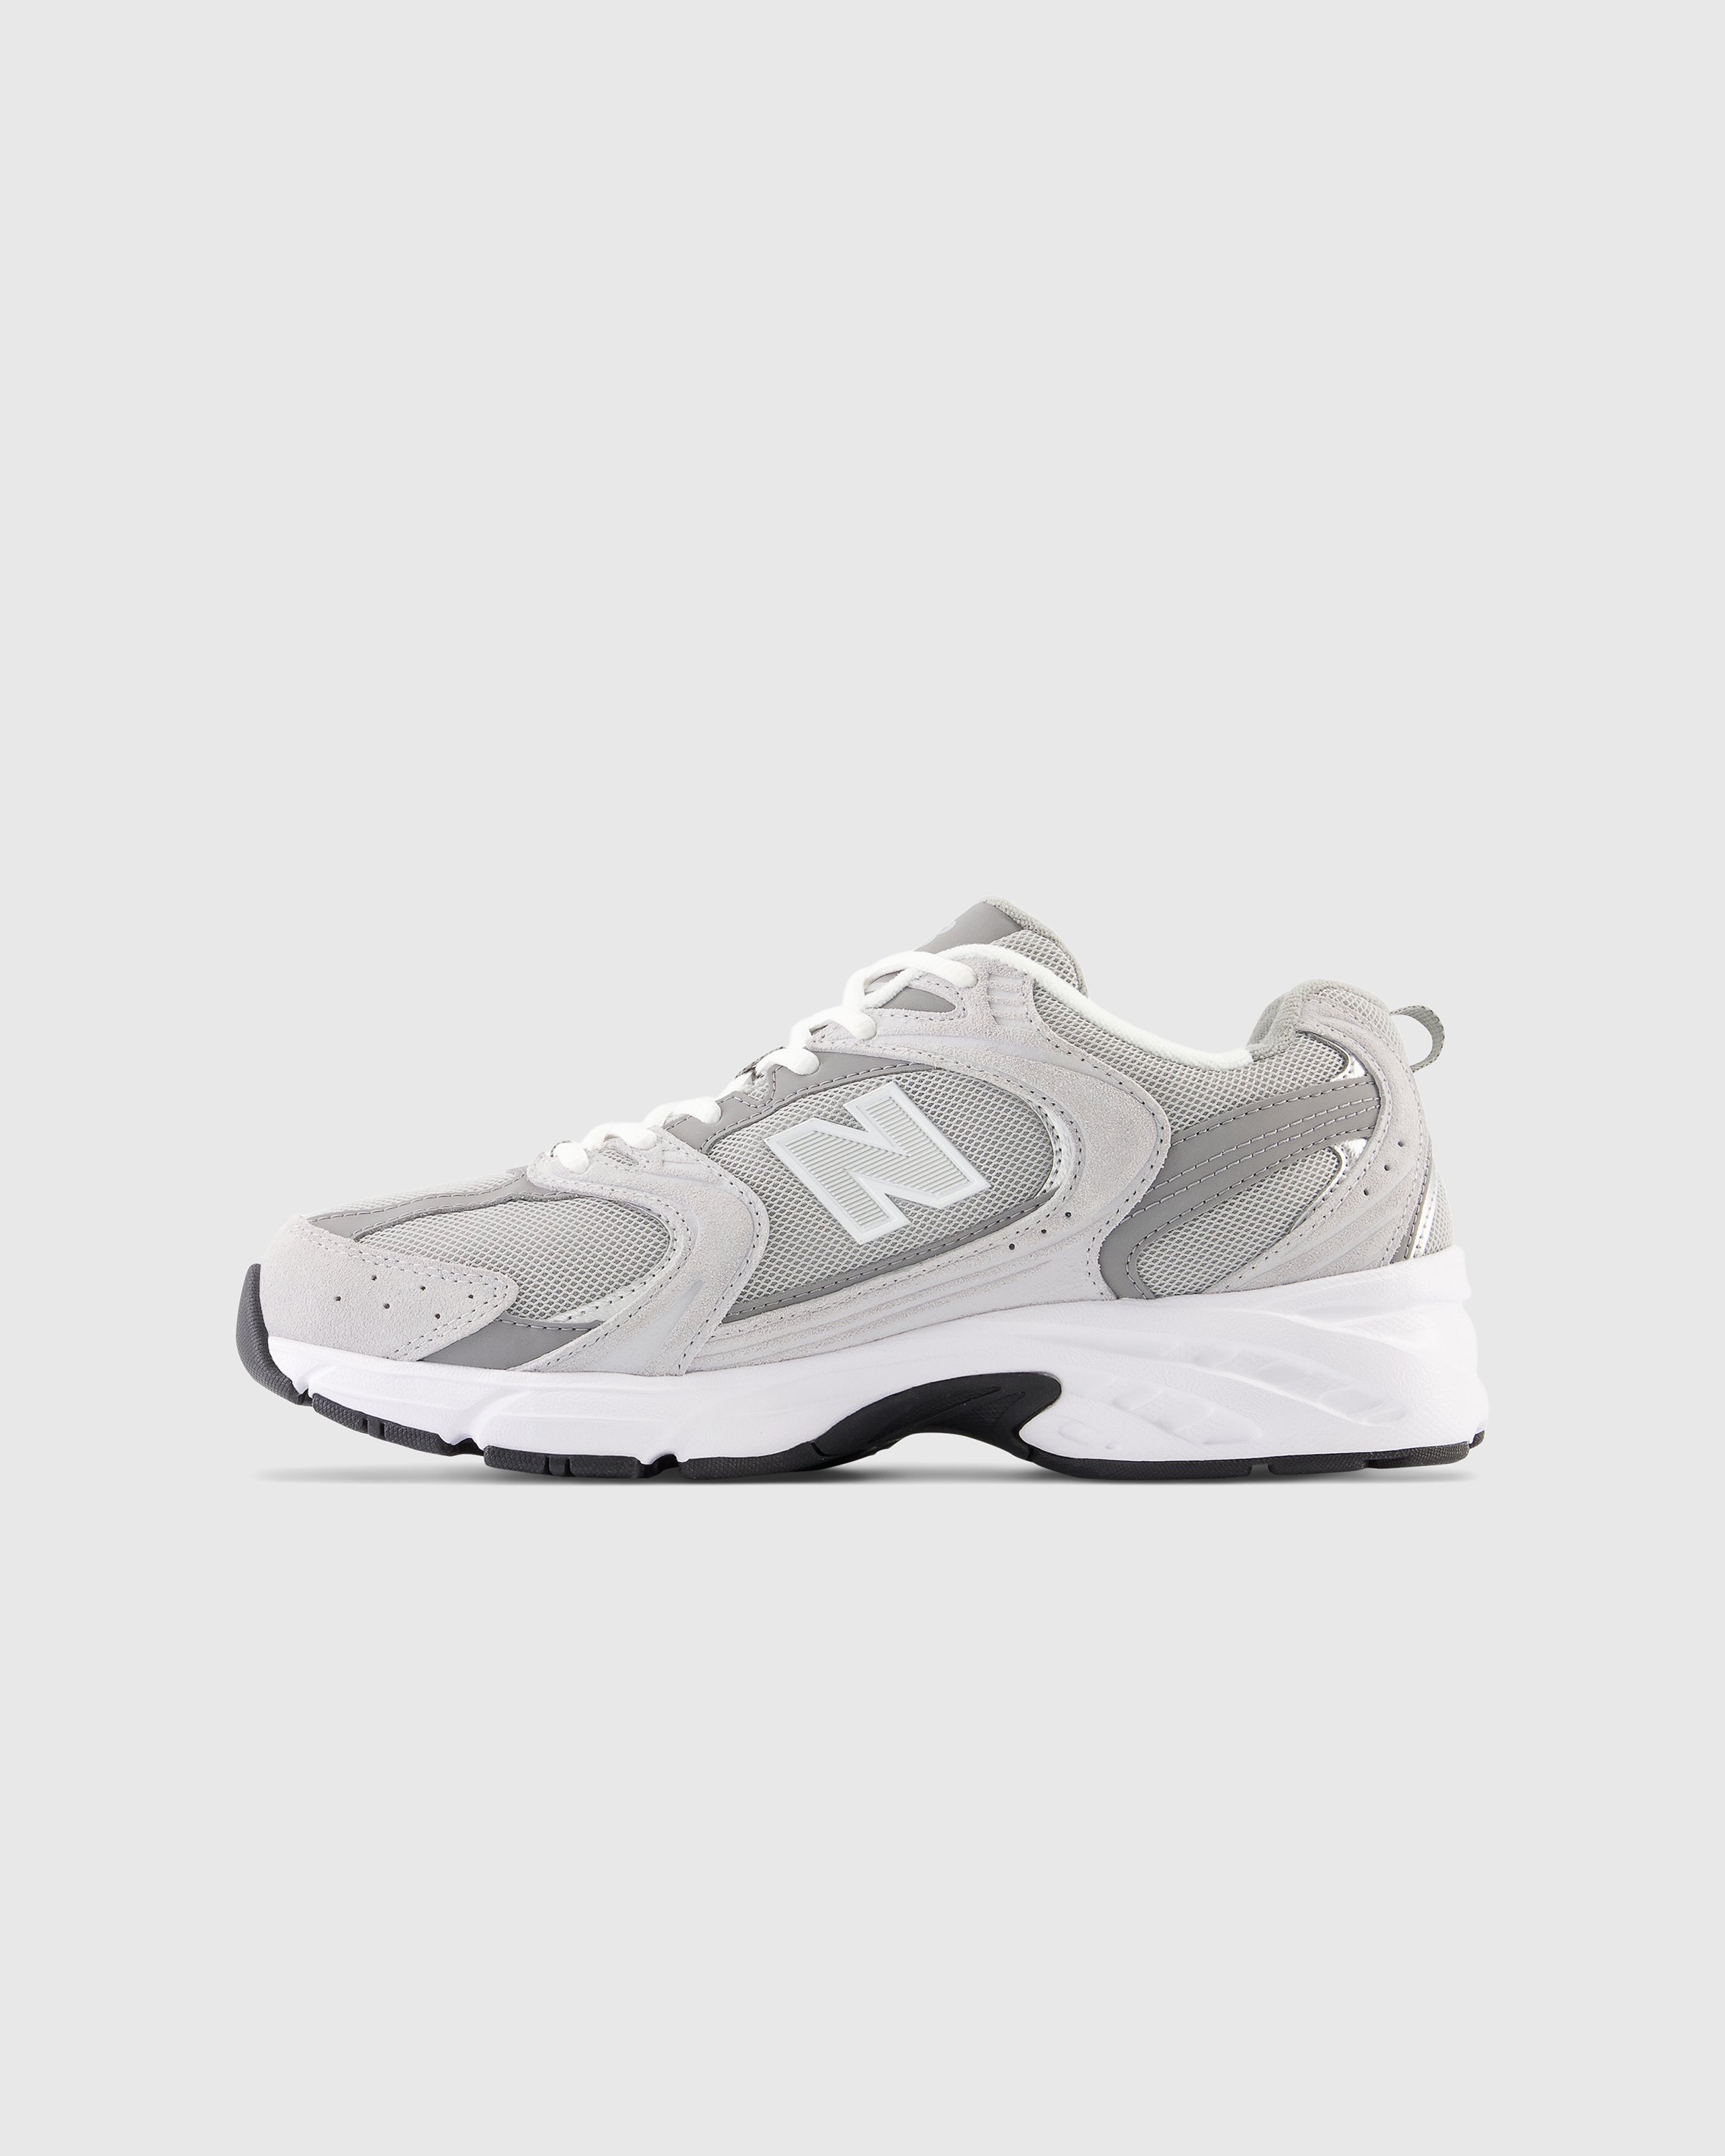 New Balance - MR530CK RAINCLOUD - Footwear - Grey - Image 2